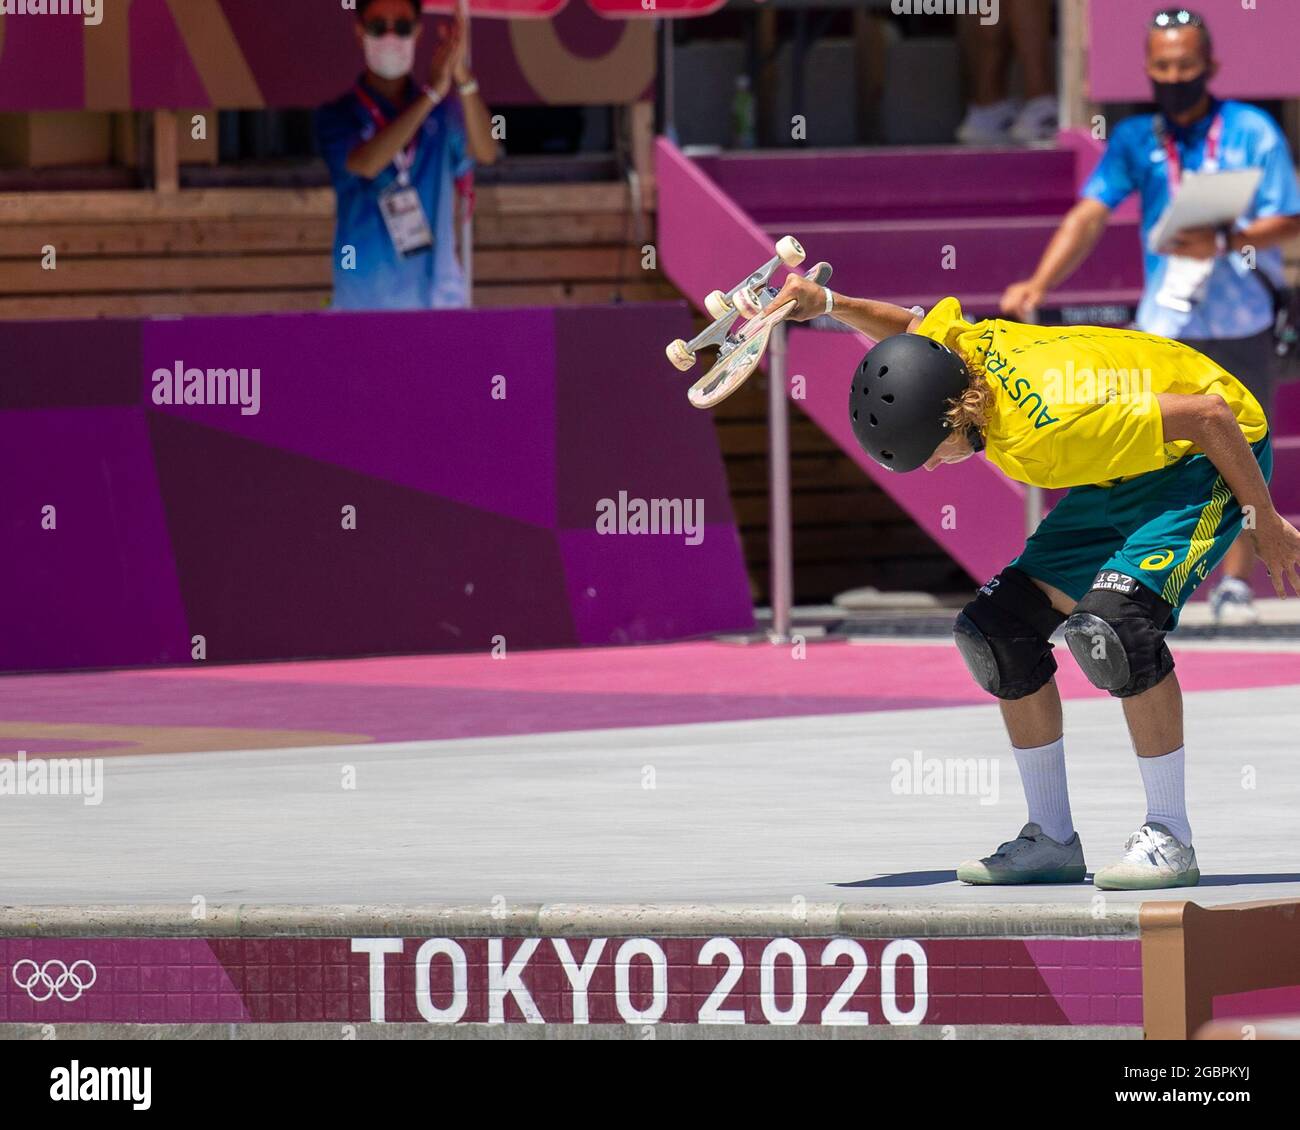 K. palmer olympic games tokyo 2020